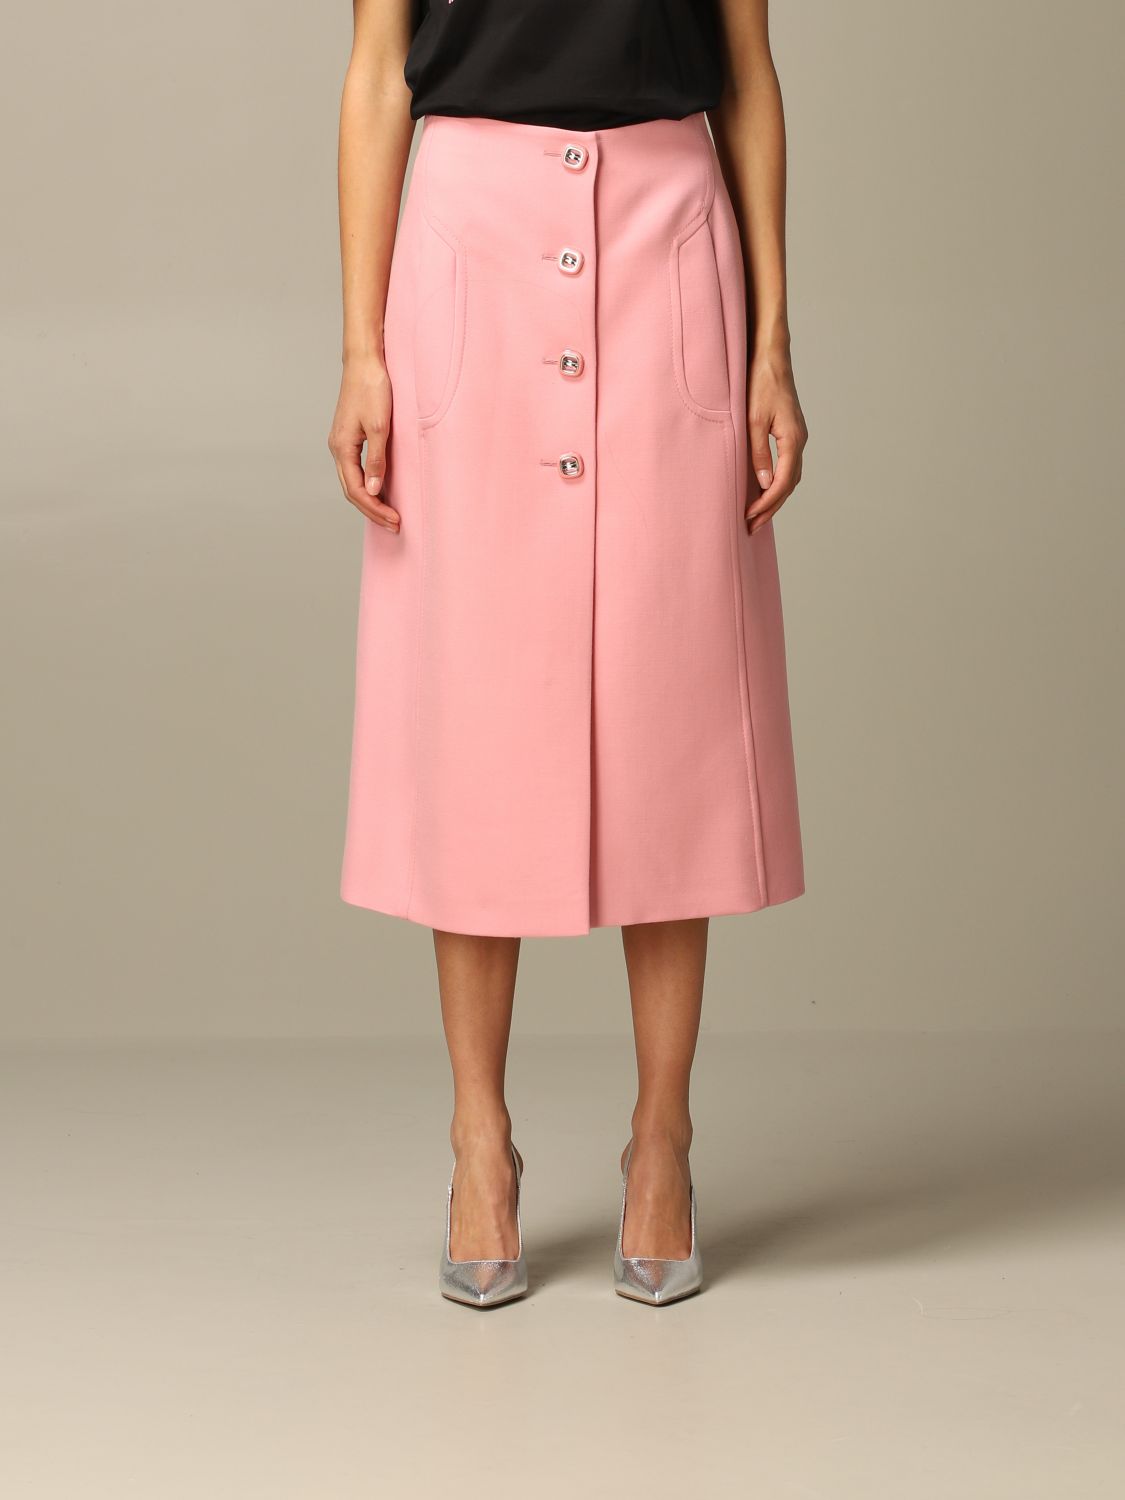 PRADA: virgin wool skirt with jewel buttons - Pink | Prada skirt P156R 1XA5  online on 